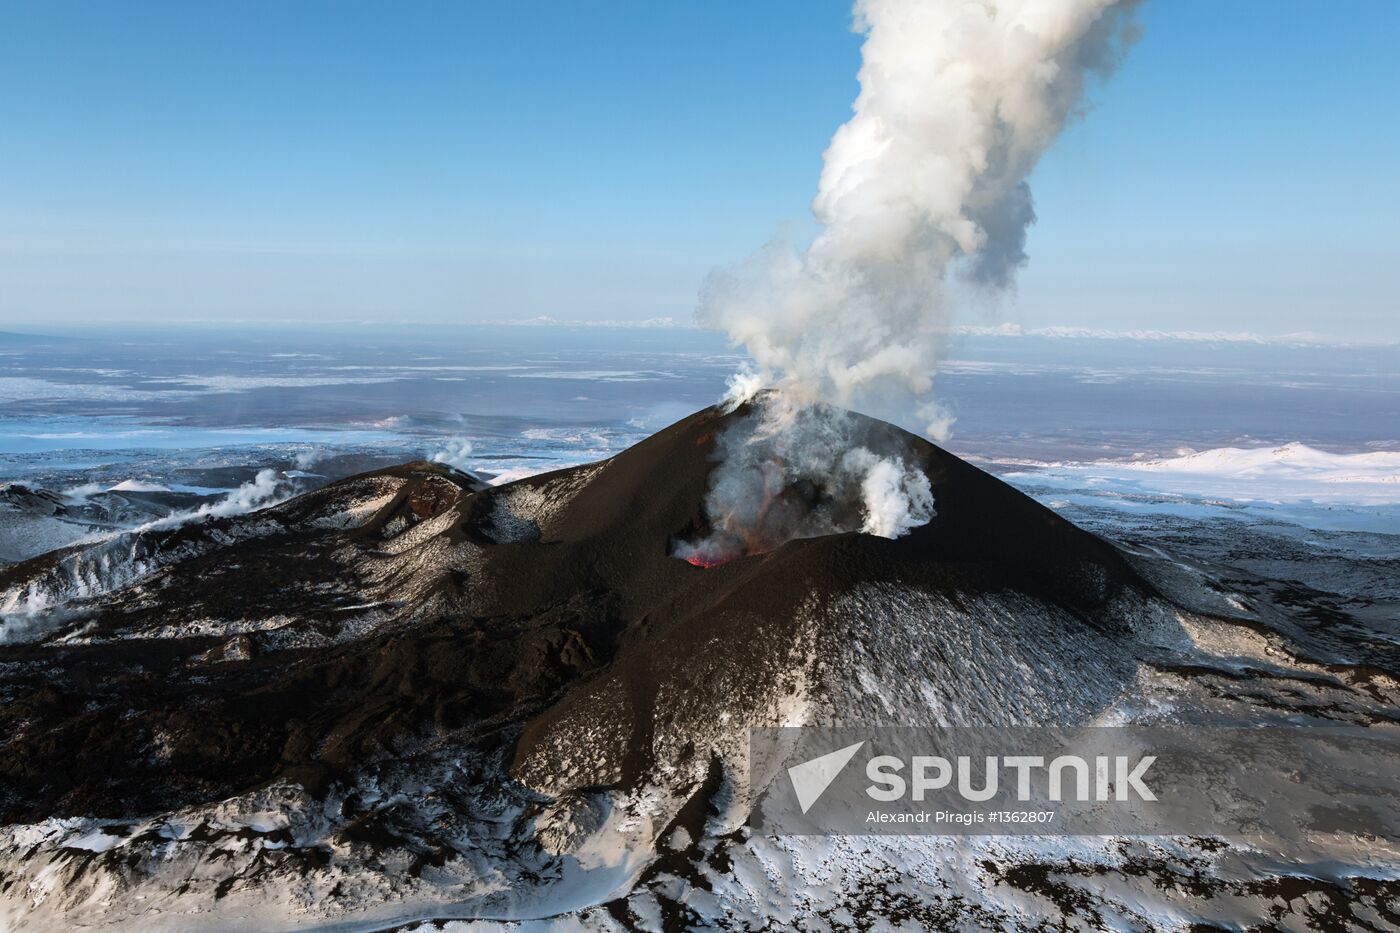 Eruption of Plosky Tobalchik volcano in Kamchatka